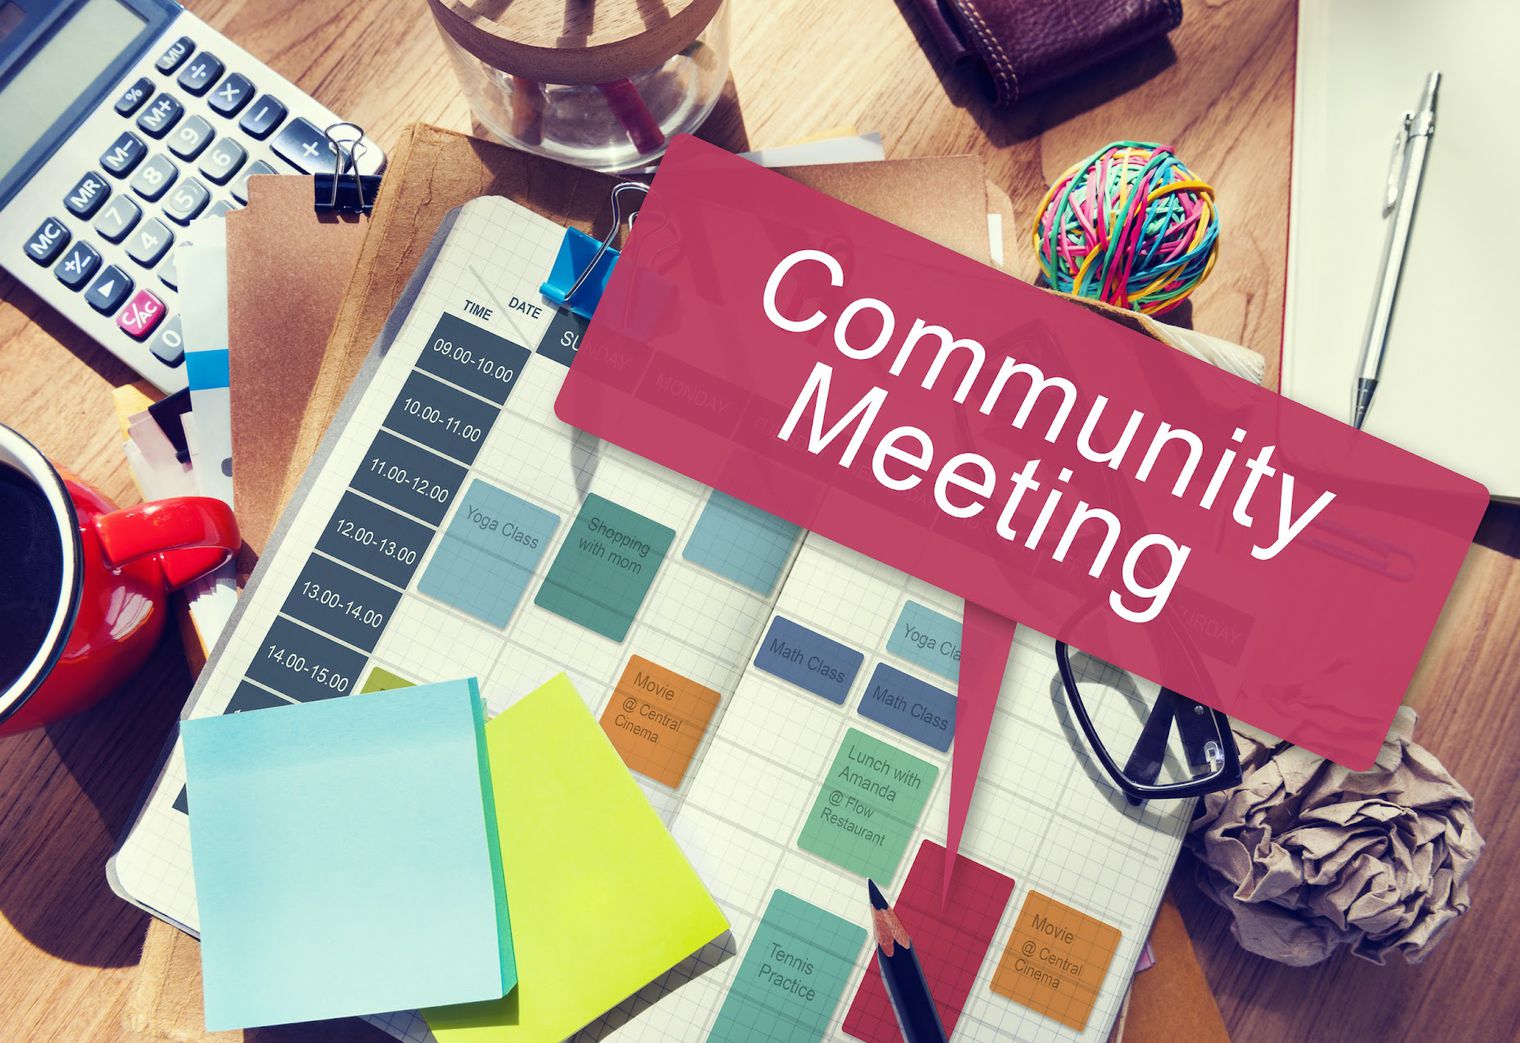 School Site Council Community Meeting